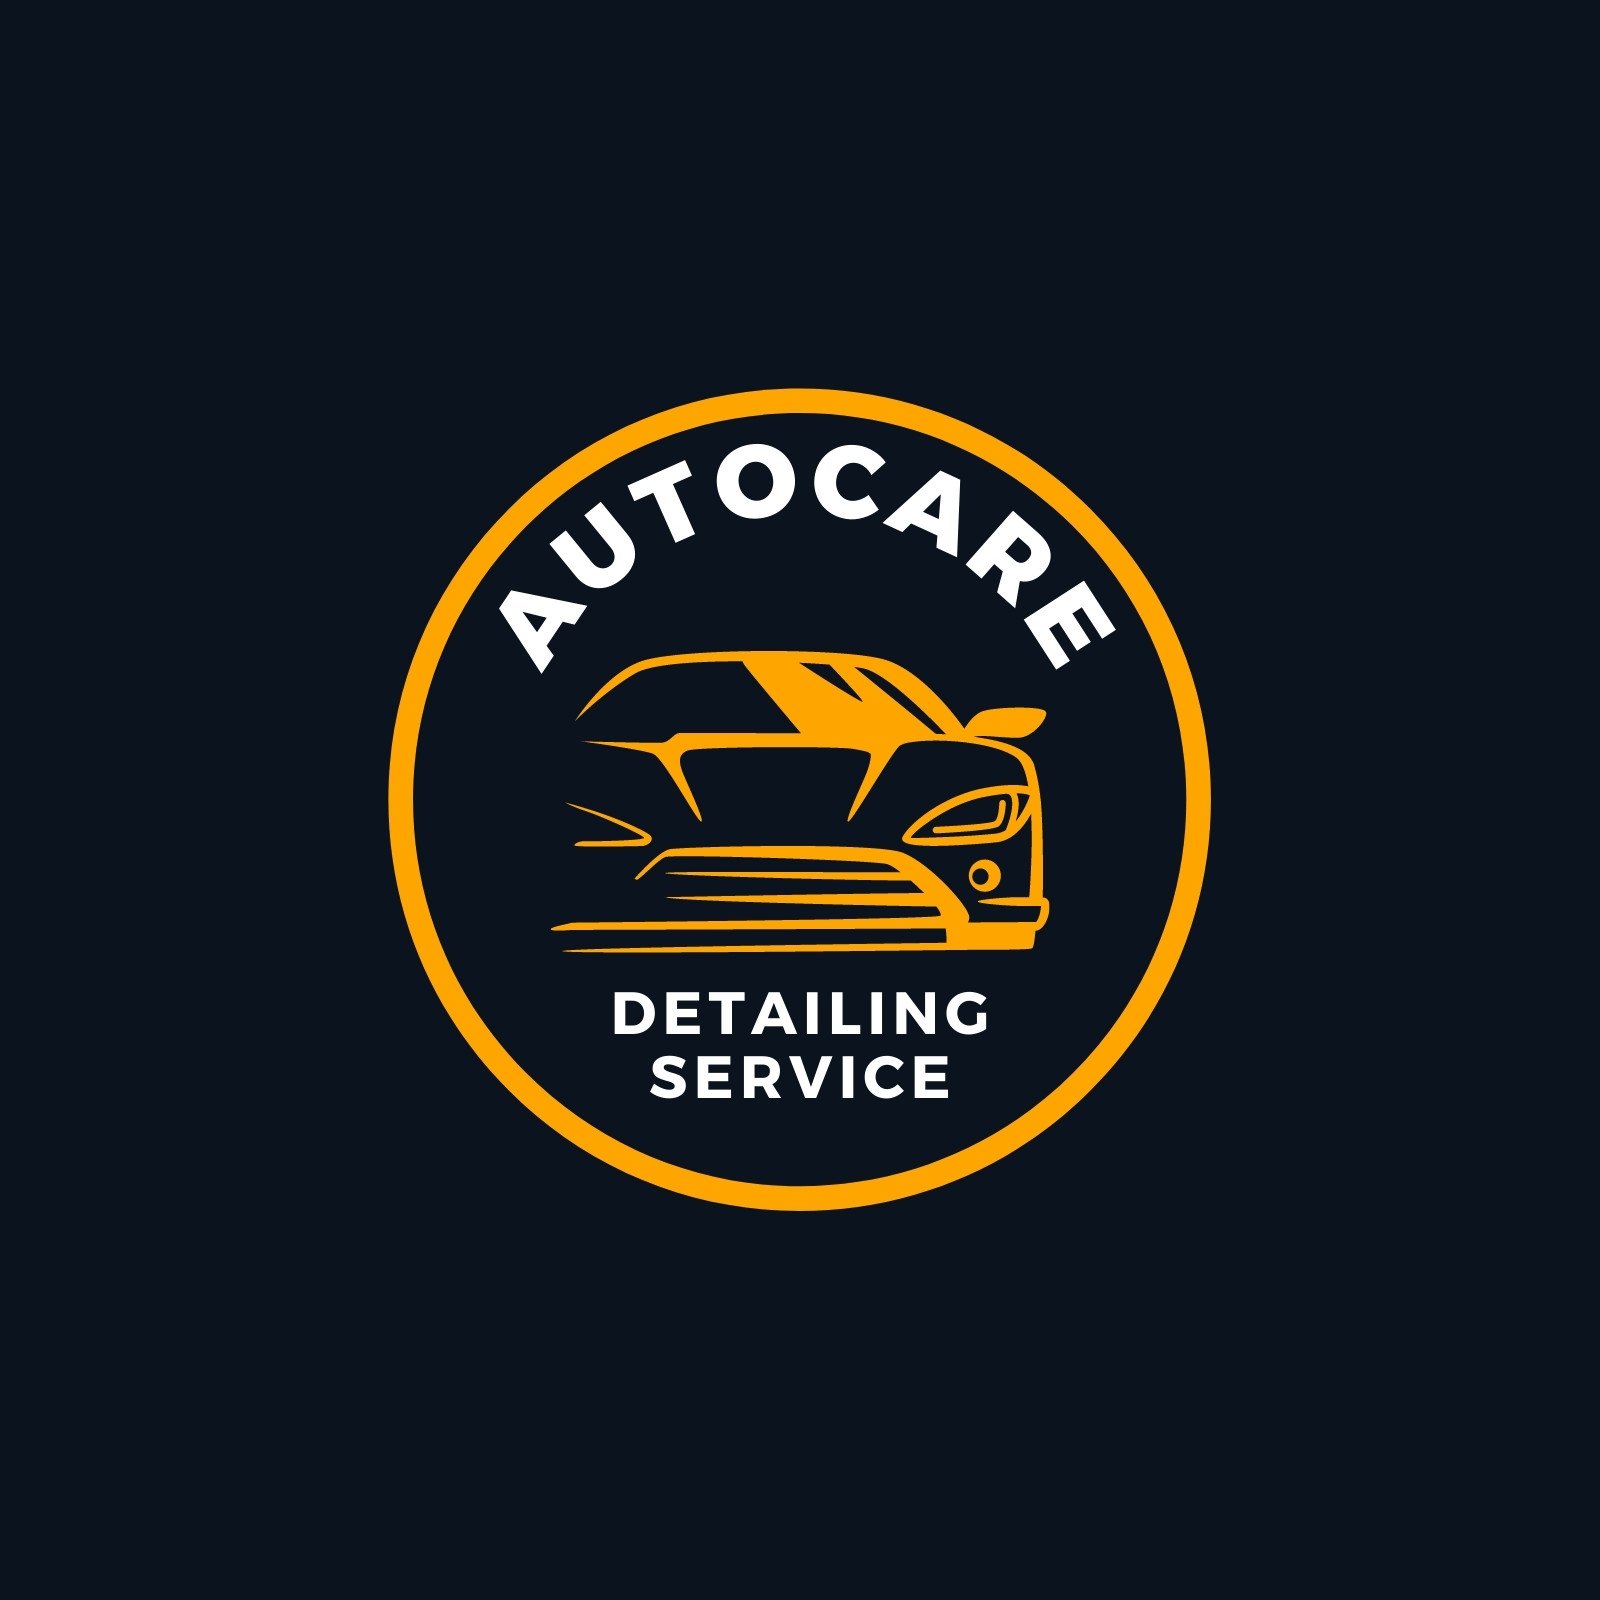 Free and customizable car wash logo templates | Canva